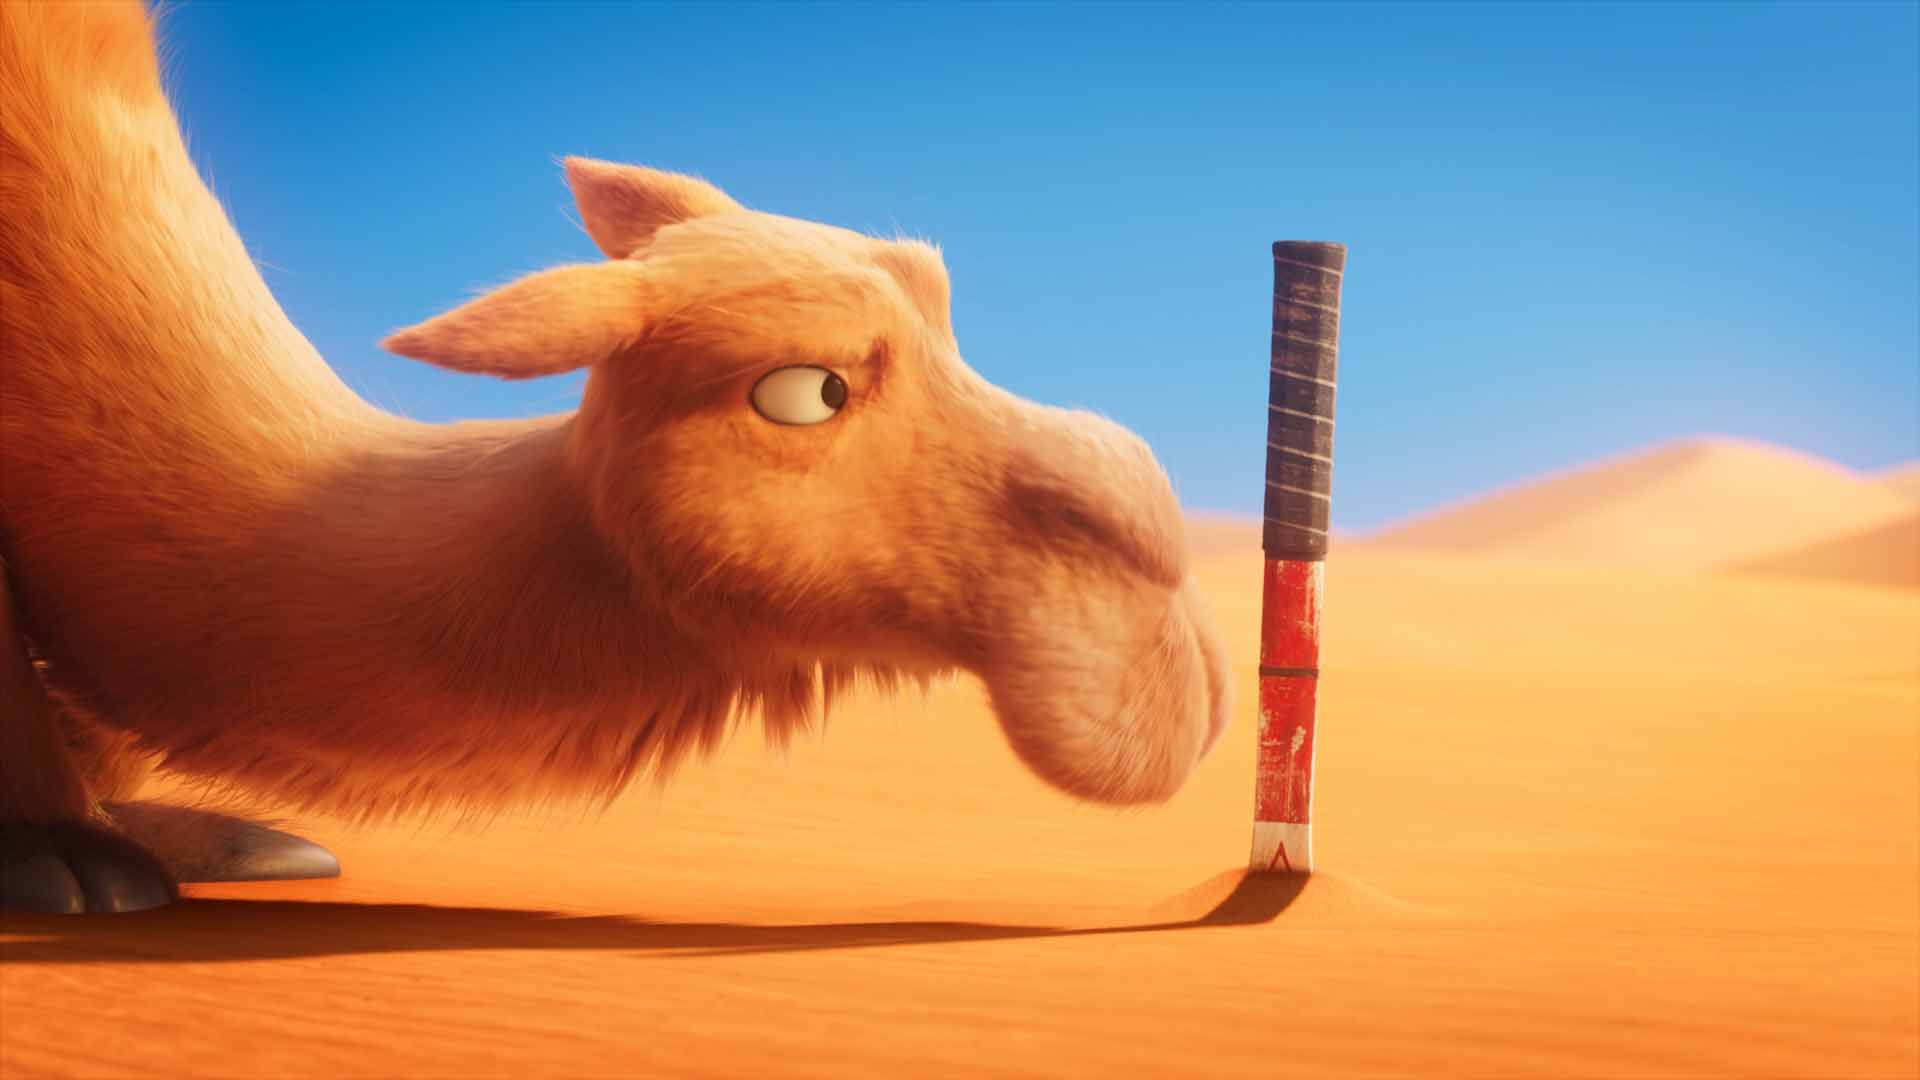 Best of Tricks for Kids 2022 beim 16th Kecskemét Animation Film Festival